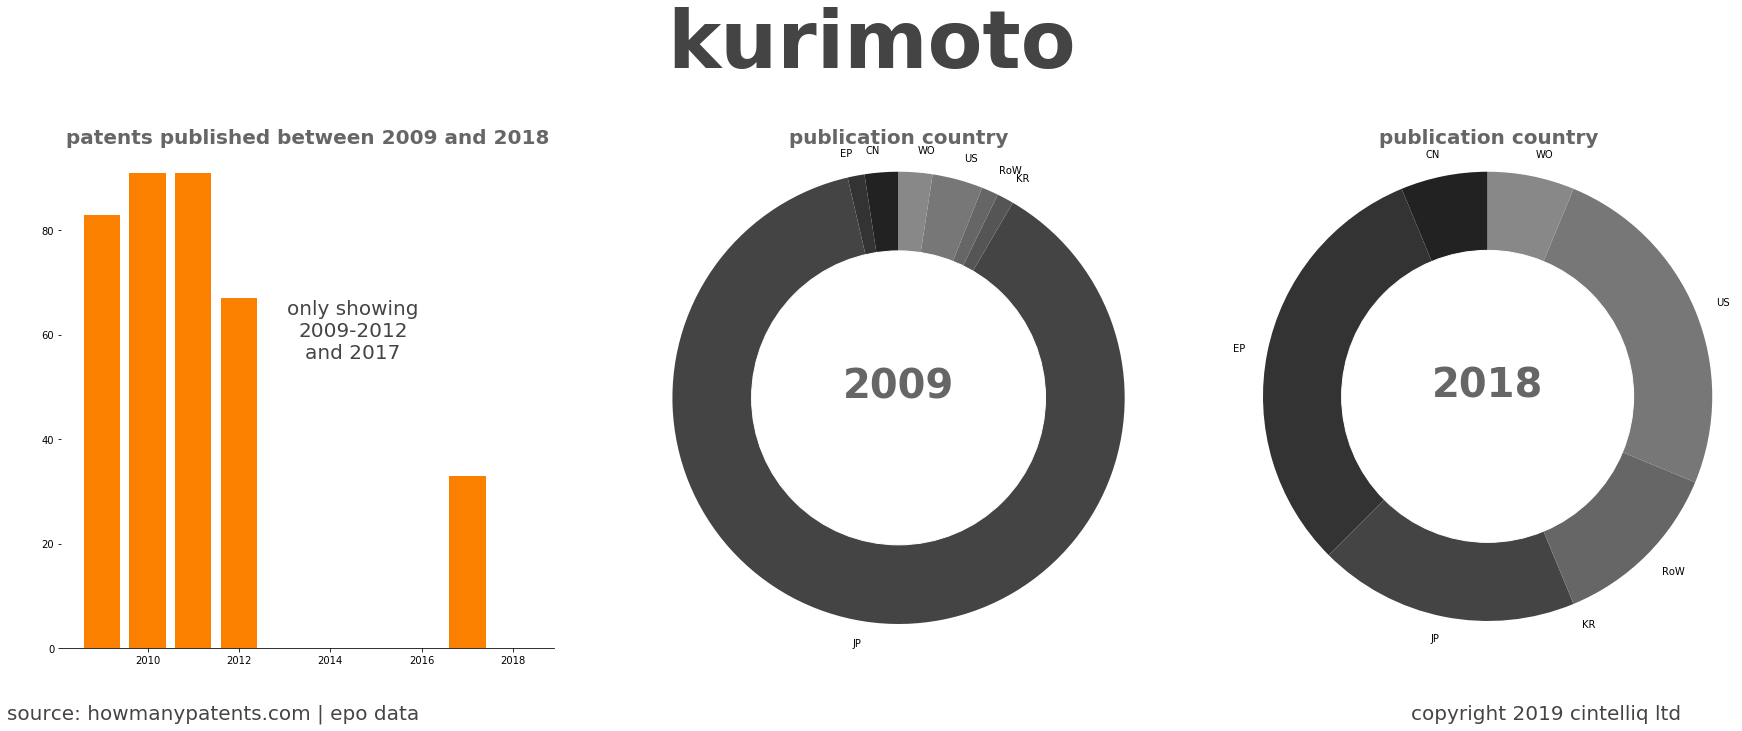 summary of patents for Kurimoto